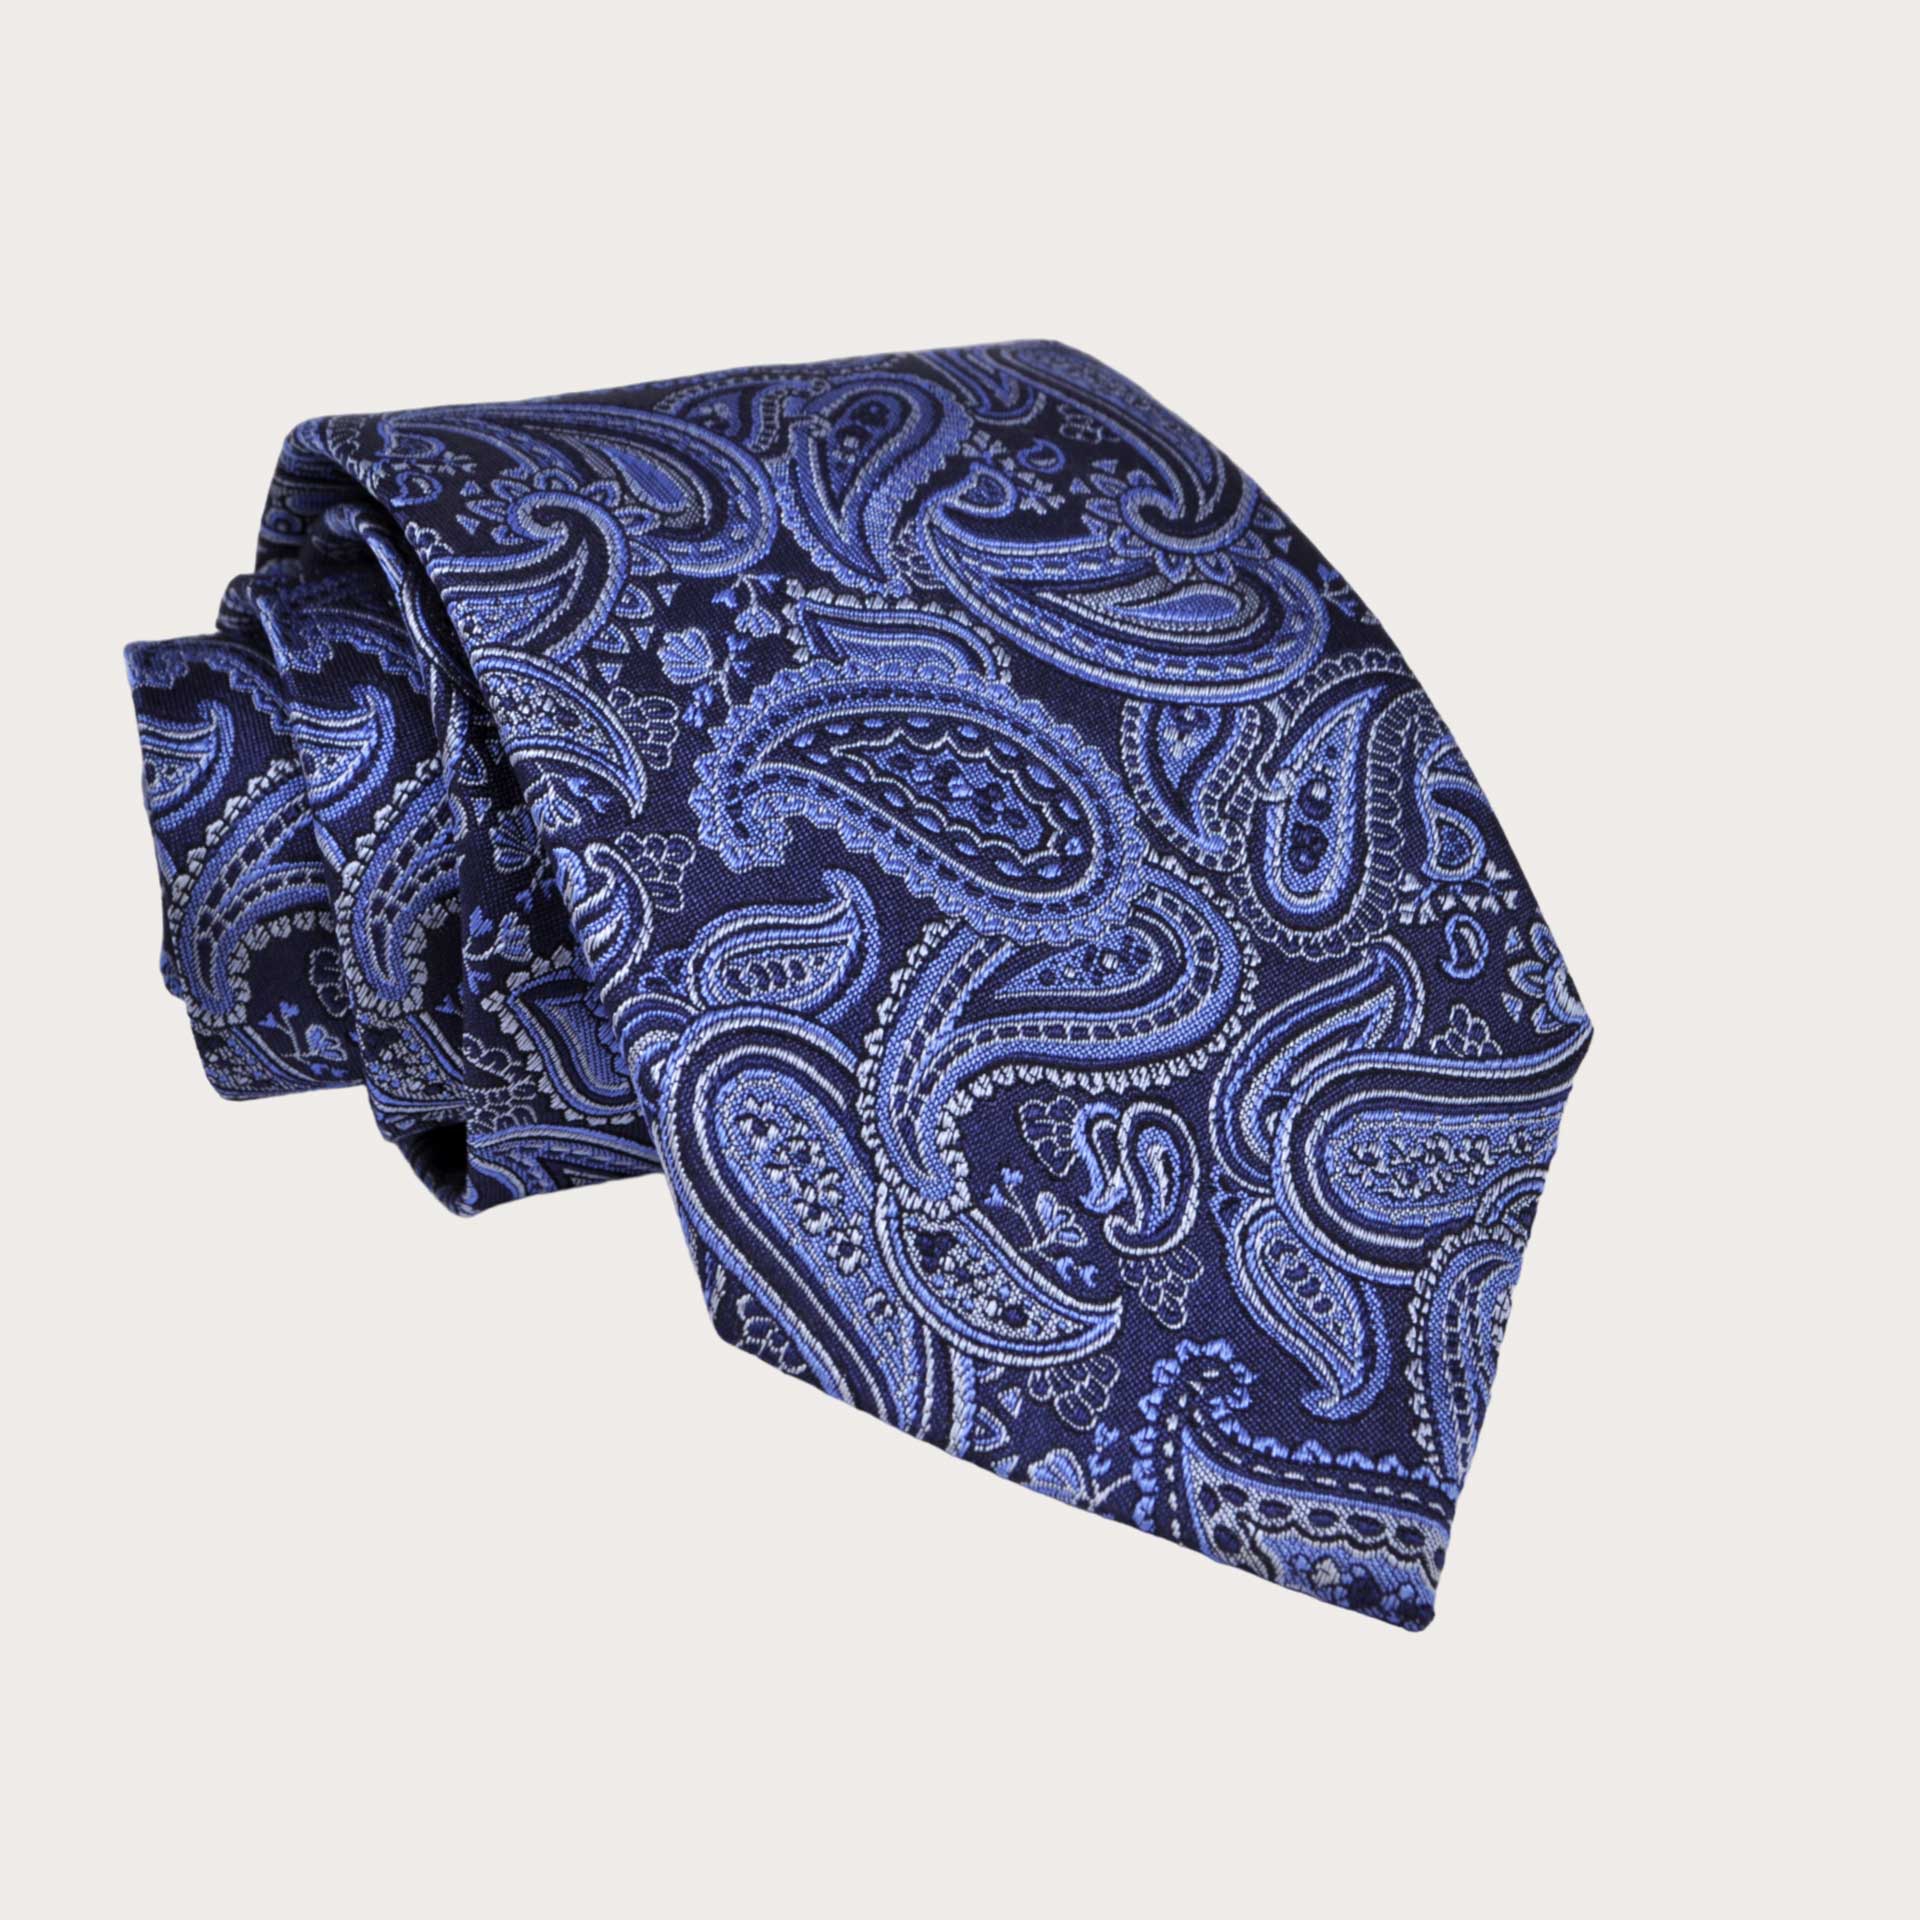 BRUCLE Cravatta uomo paisley blu in seta jacquard